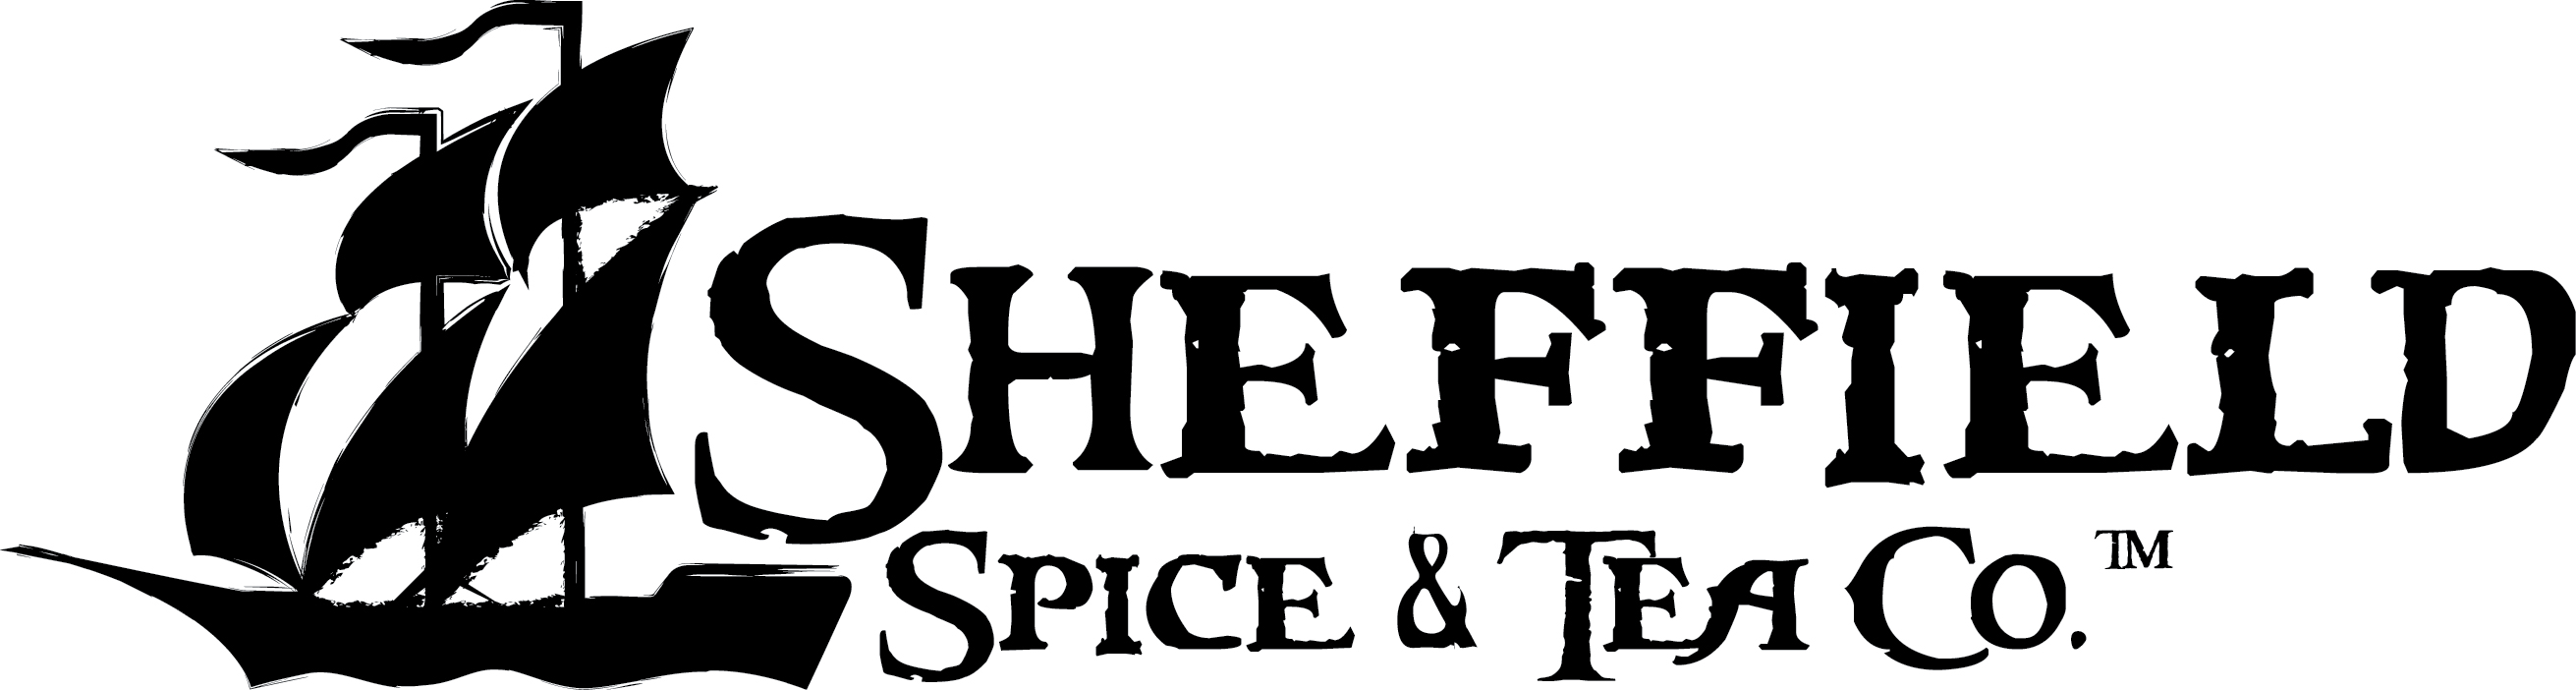 Spice and Herb Grinder Bottle - Sheffield Spice & Tea Co